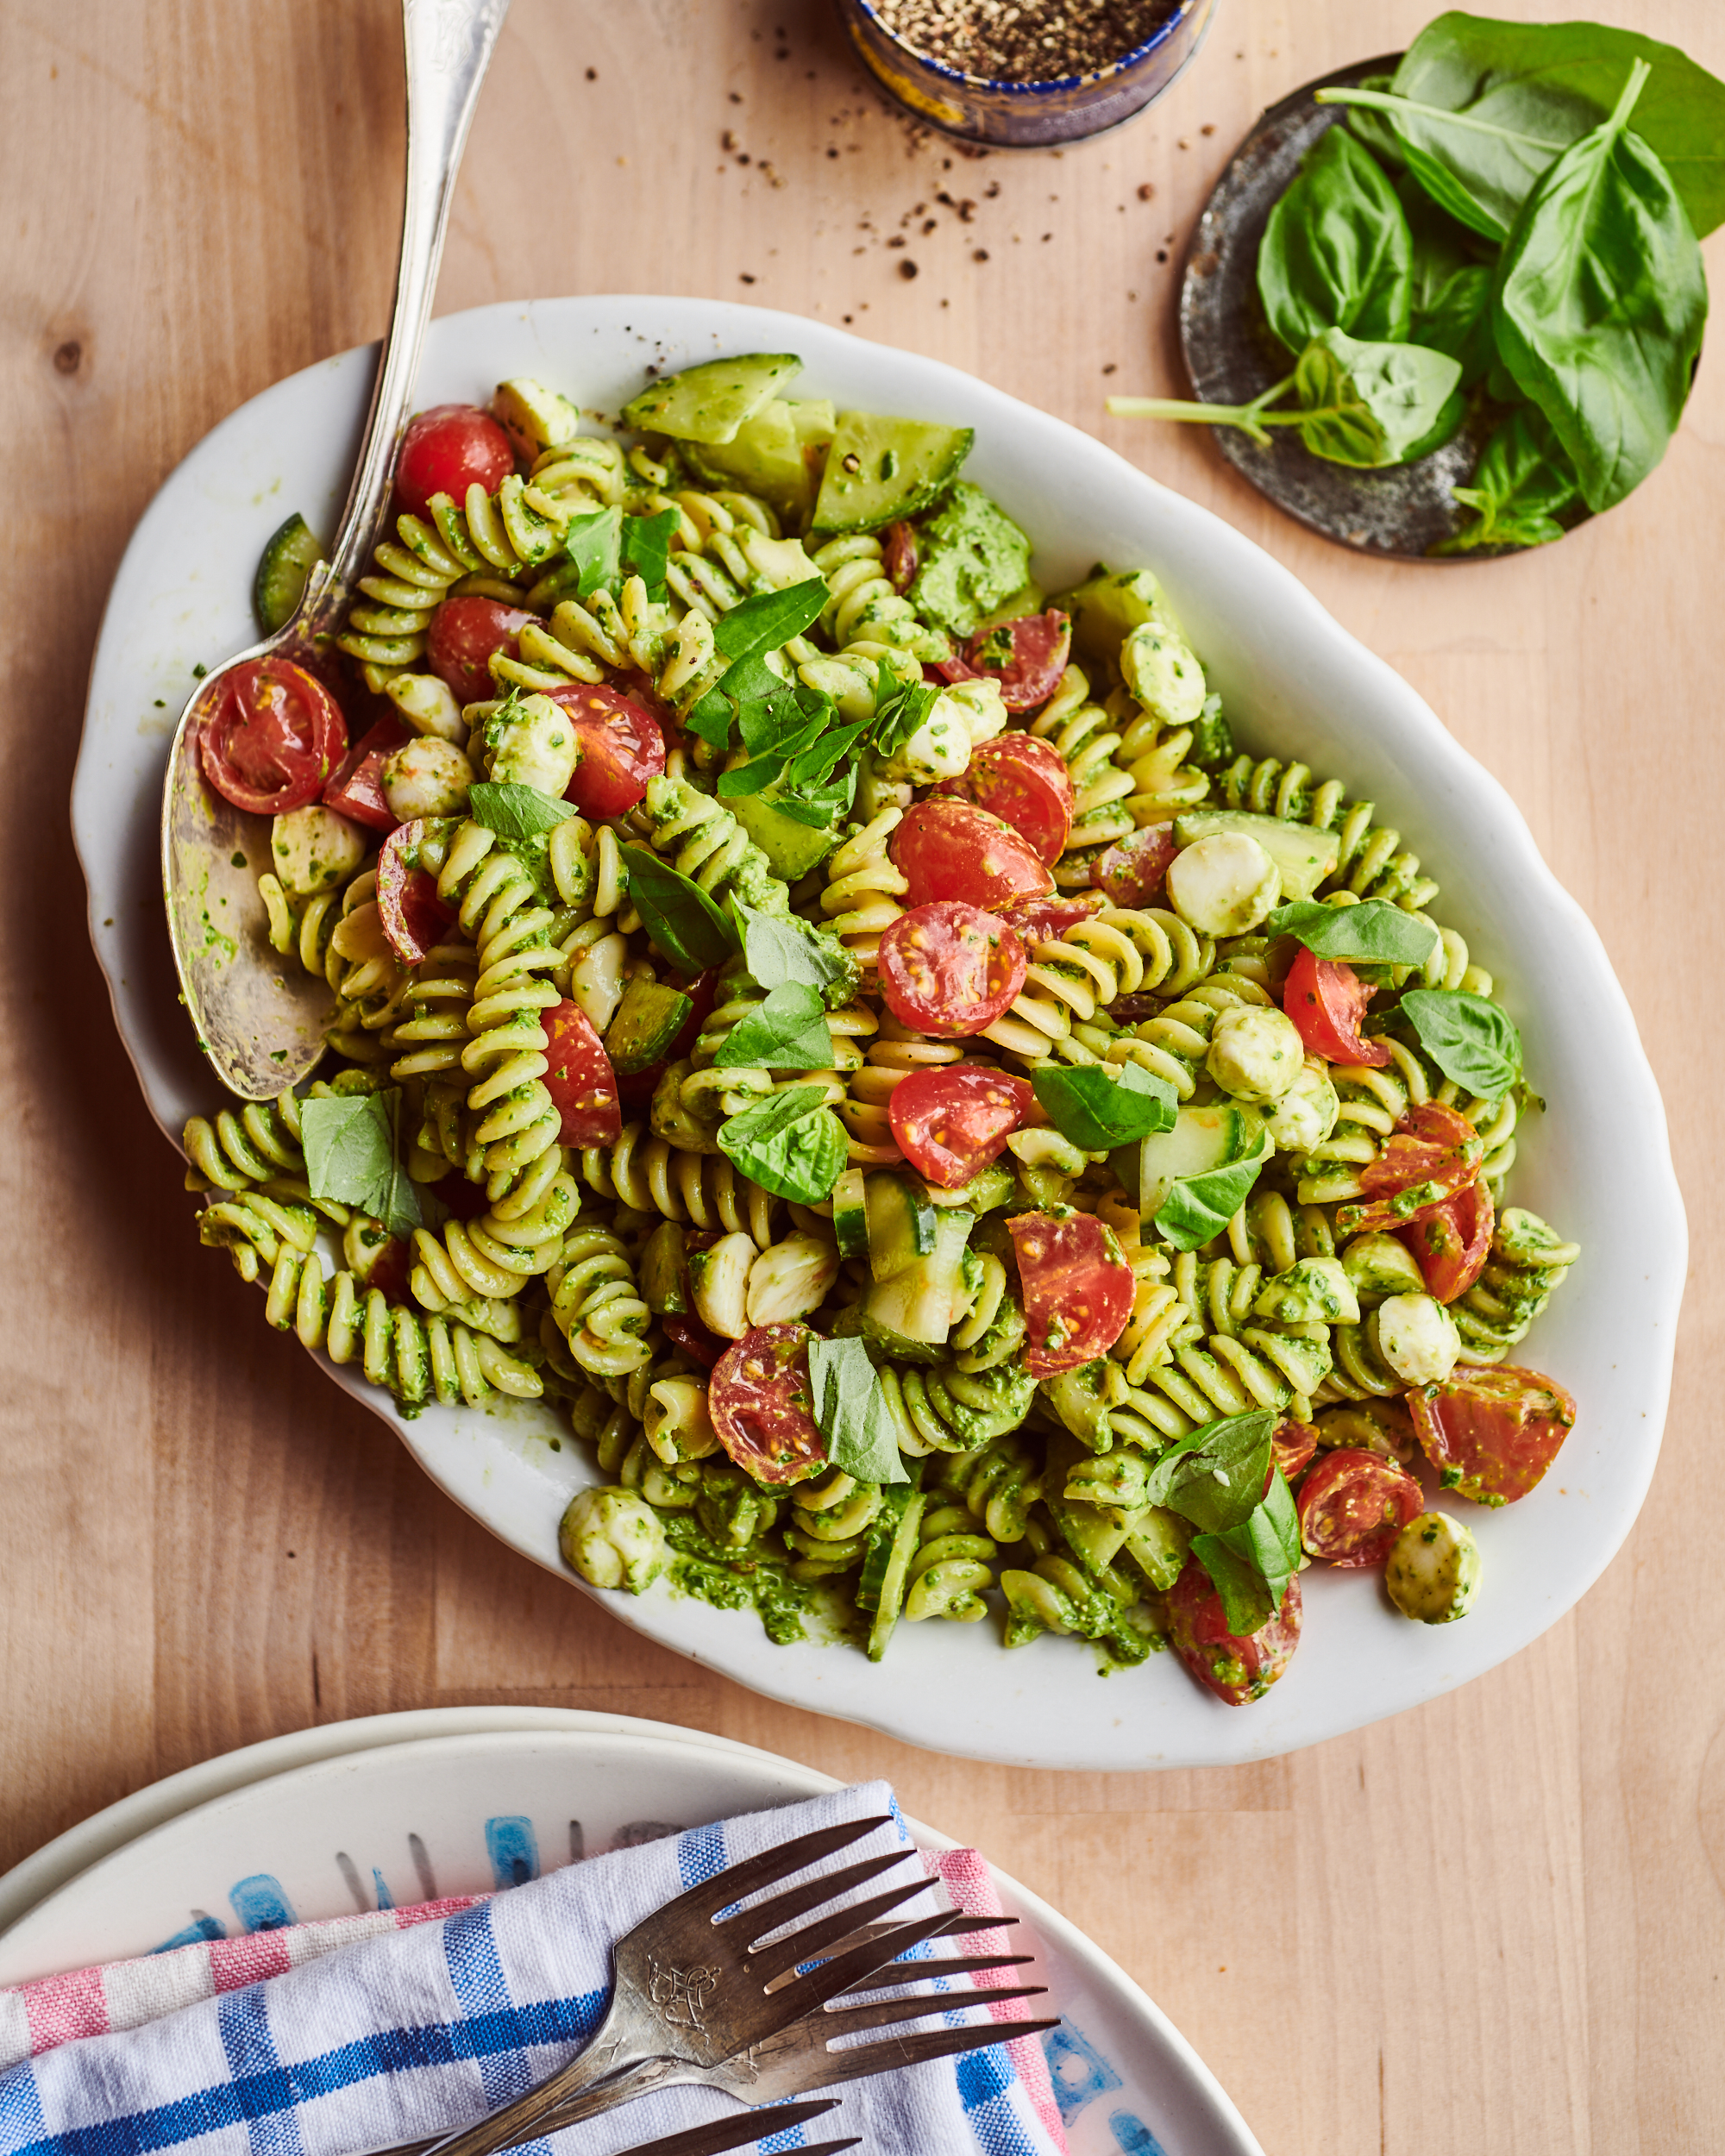 The Kitchn: Make a big batch of pesto pasta salad, eat it all week long.